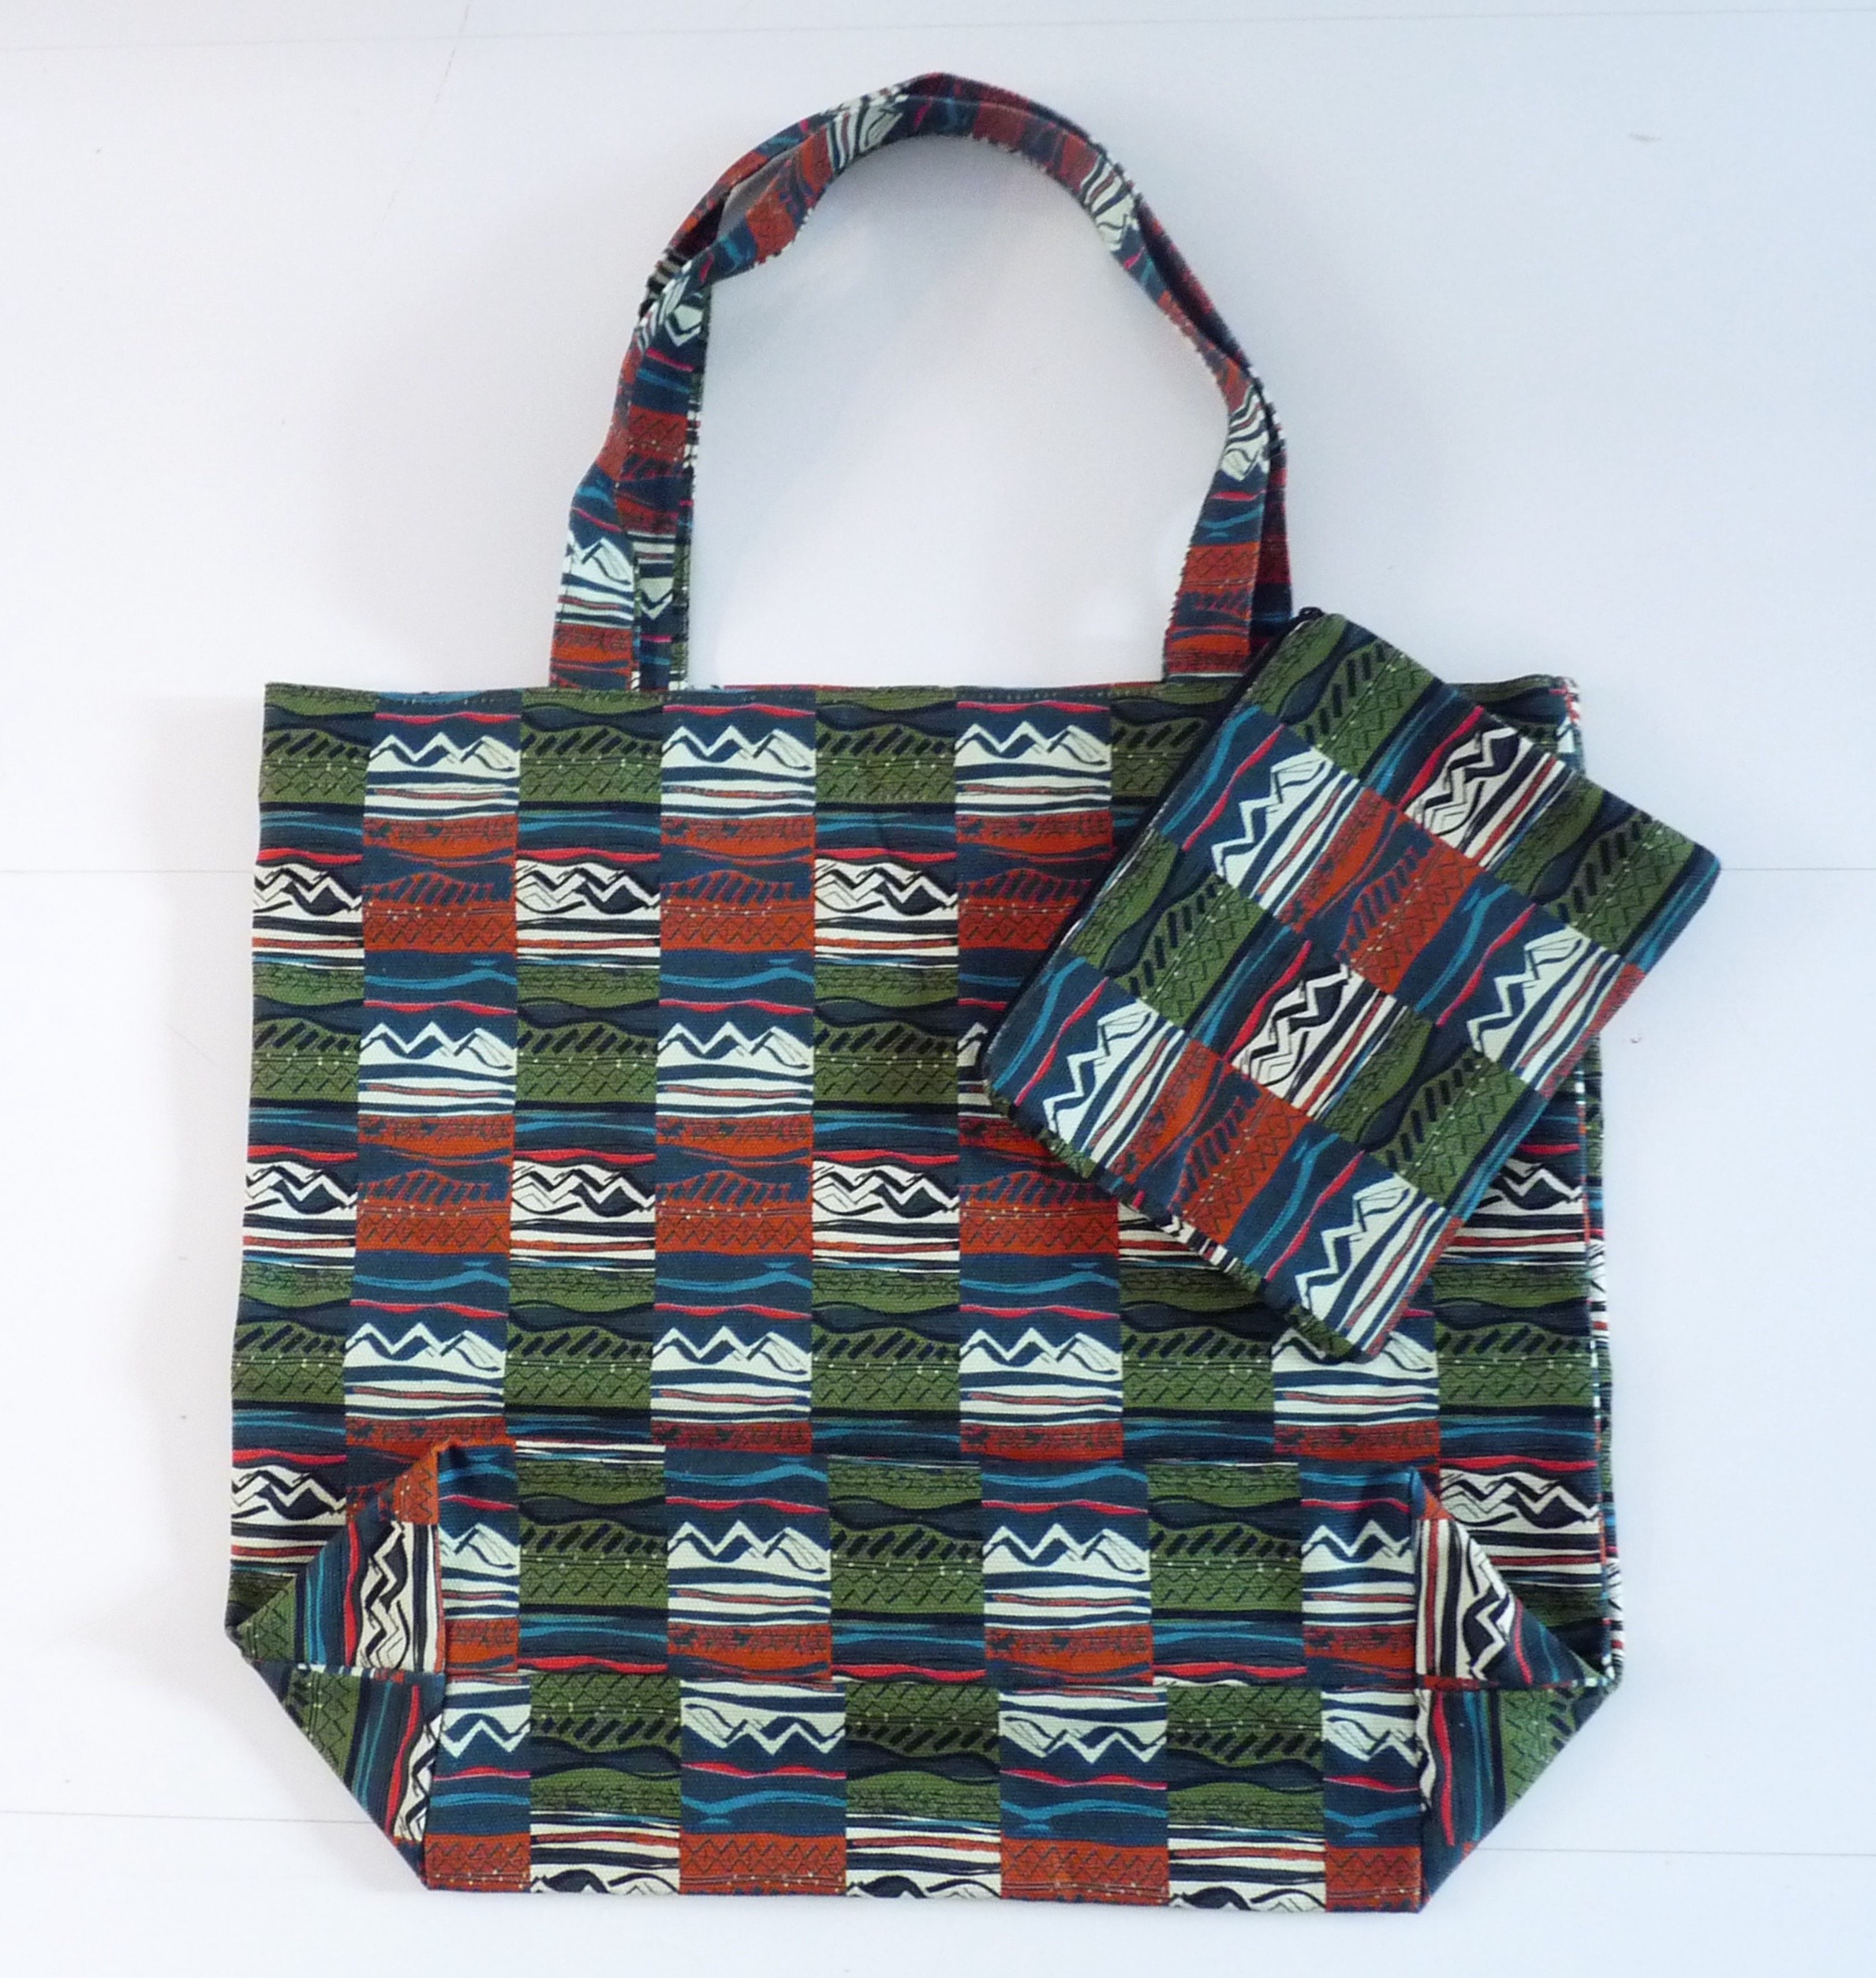 shopping bag + purse;
Uluruloru